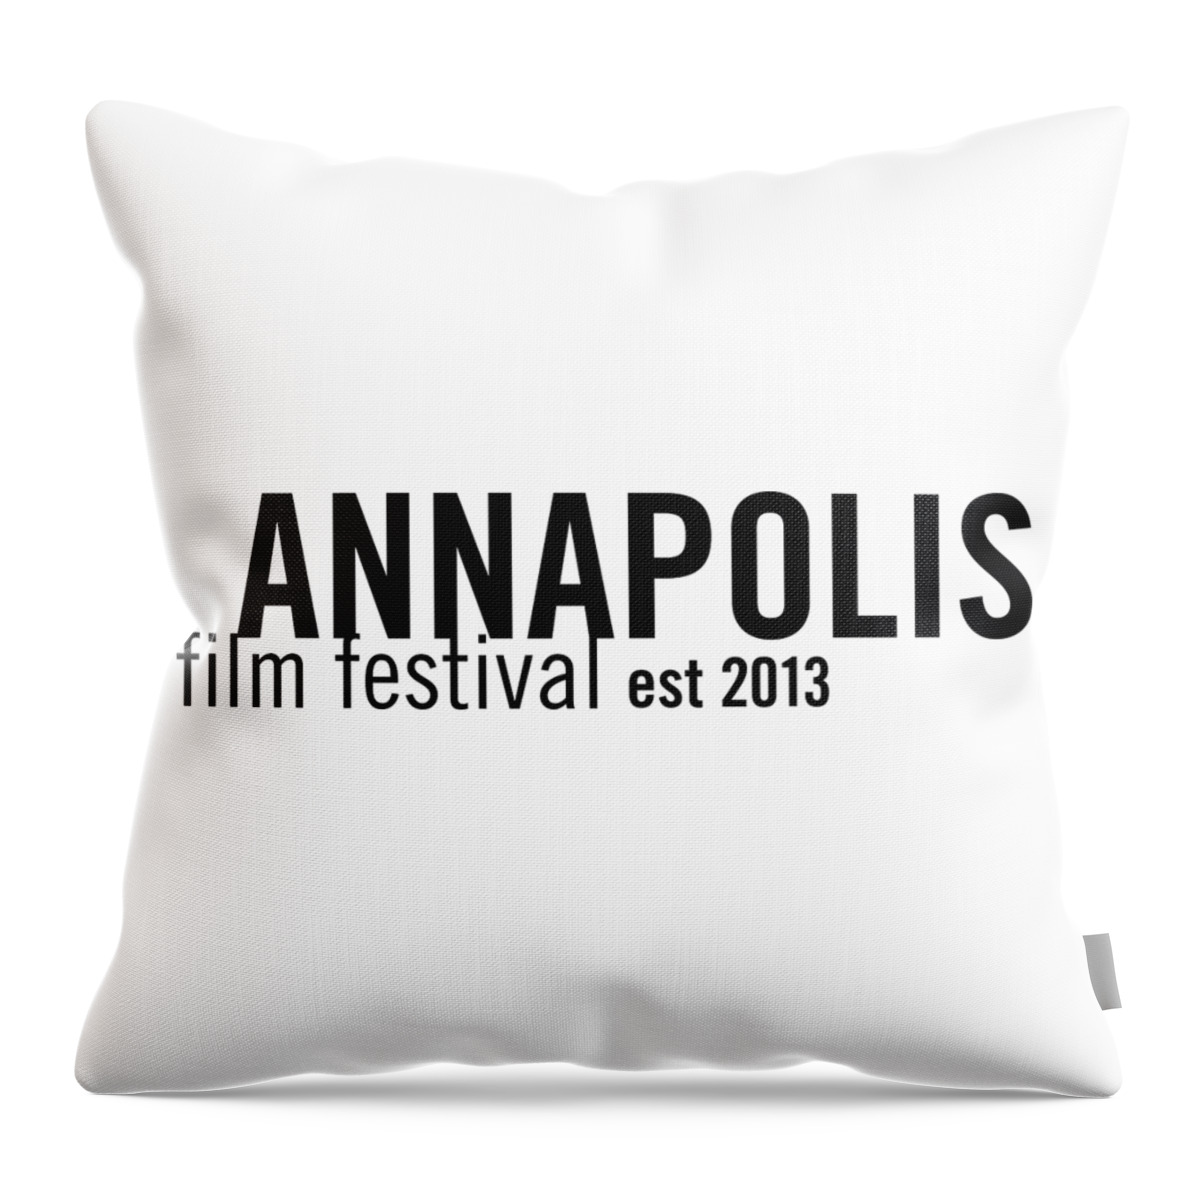 Annapolis Film Festival Throw Pillow featuring the digital art Annapolis Film Festival, est 2013 by Joe Barsin